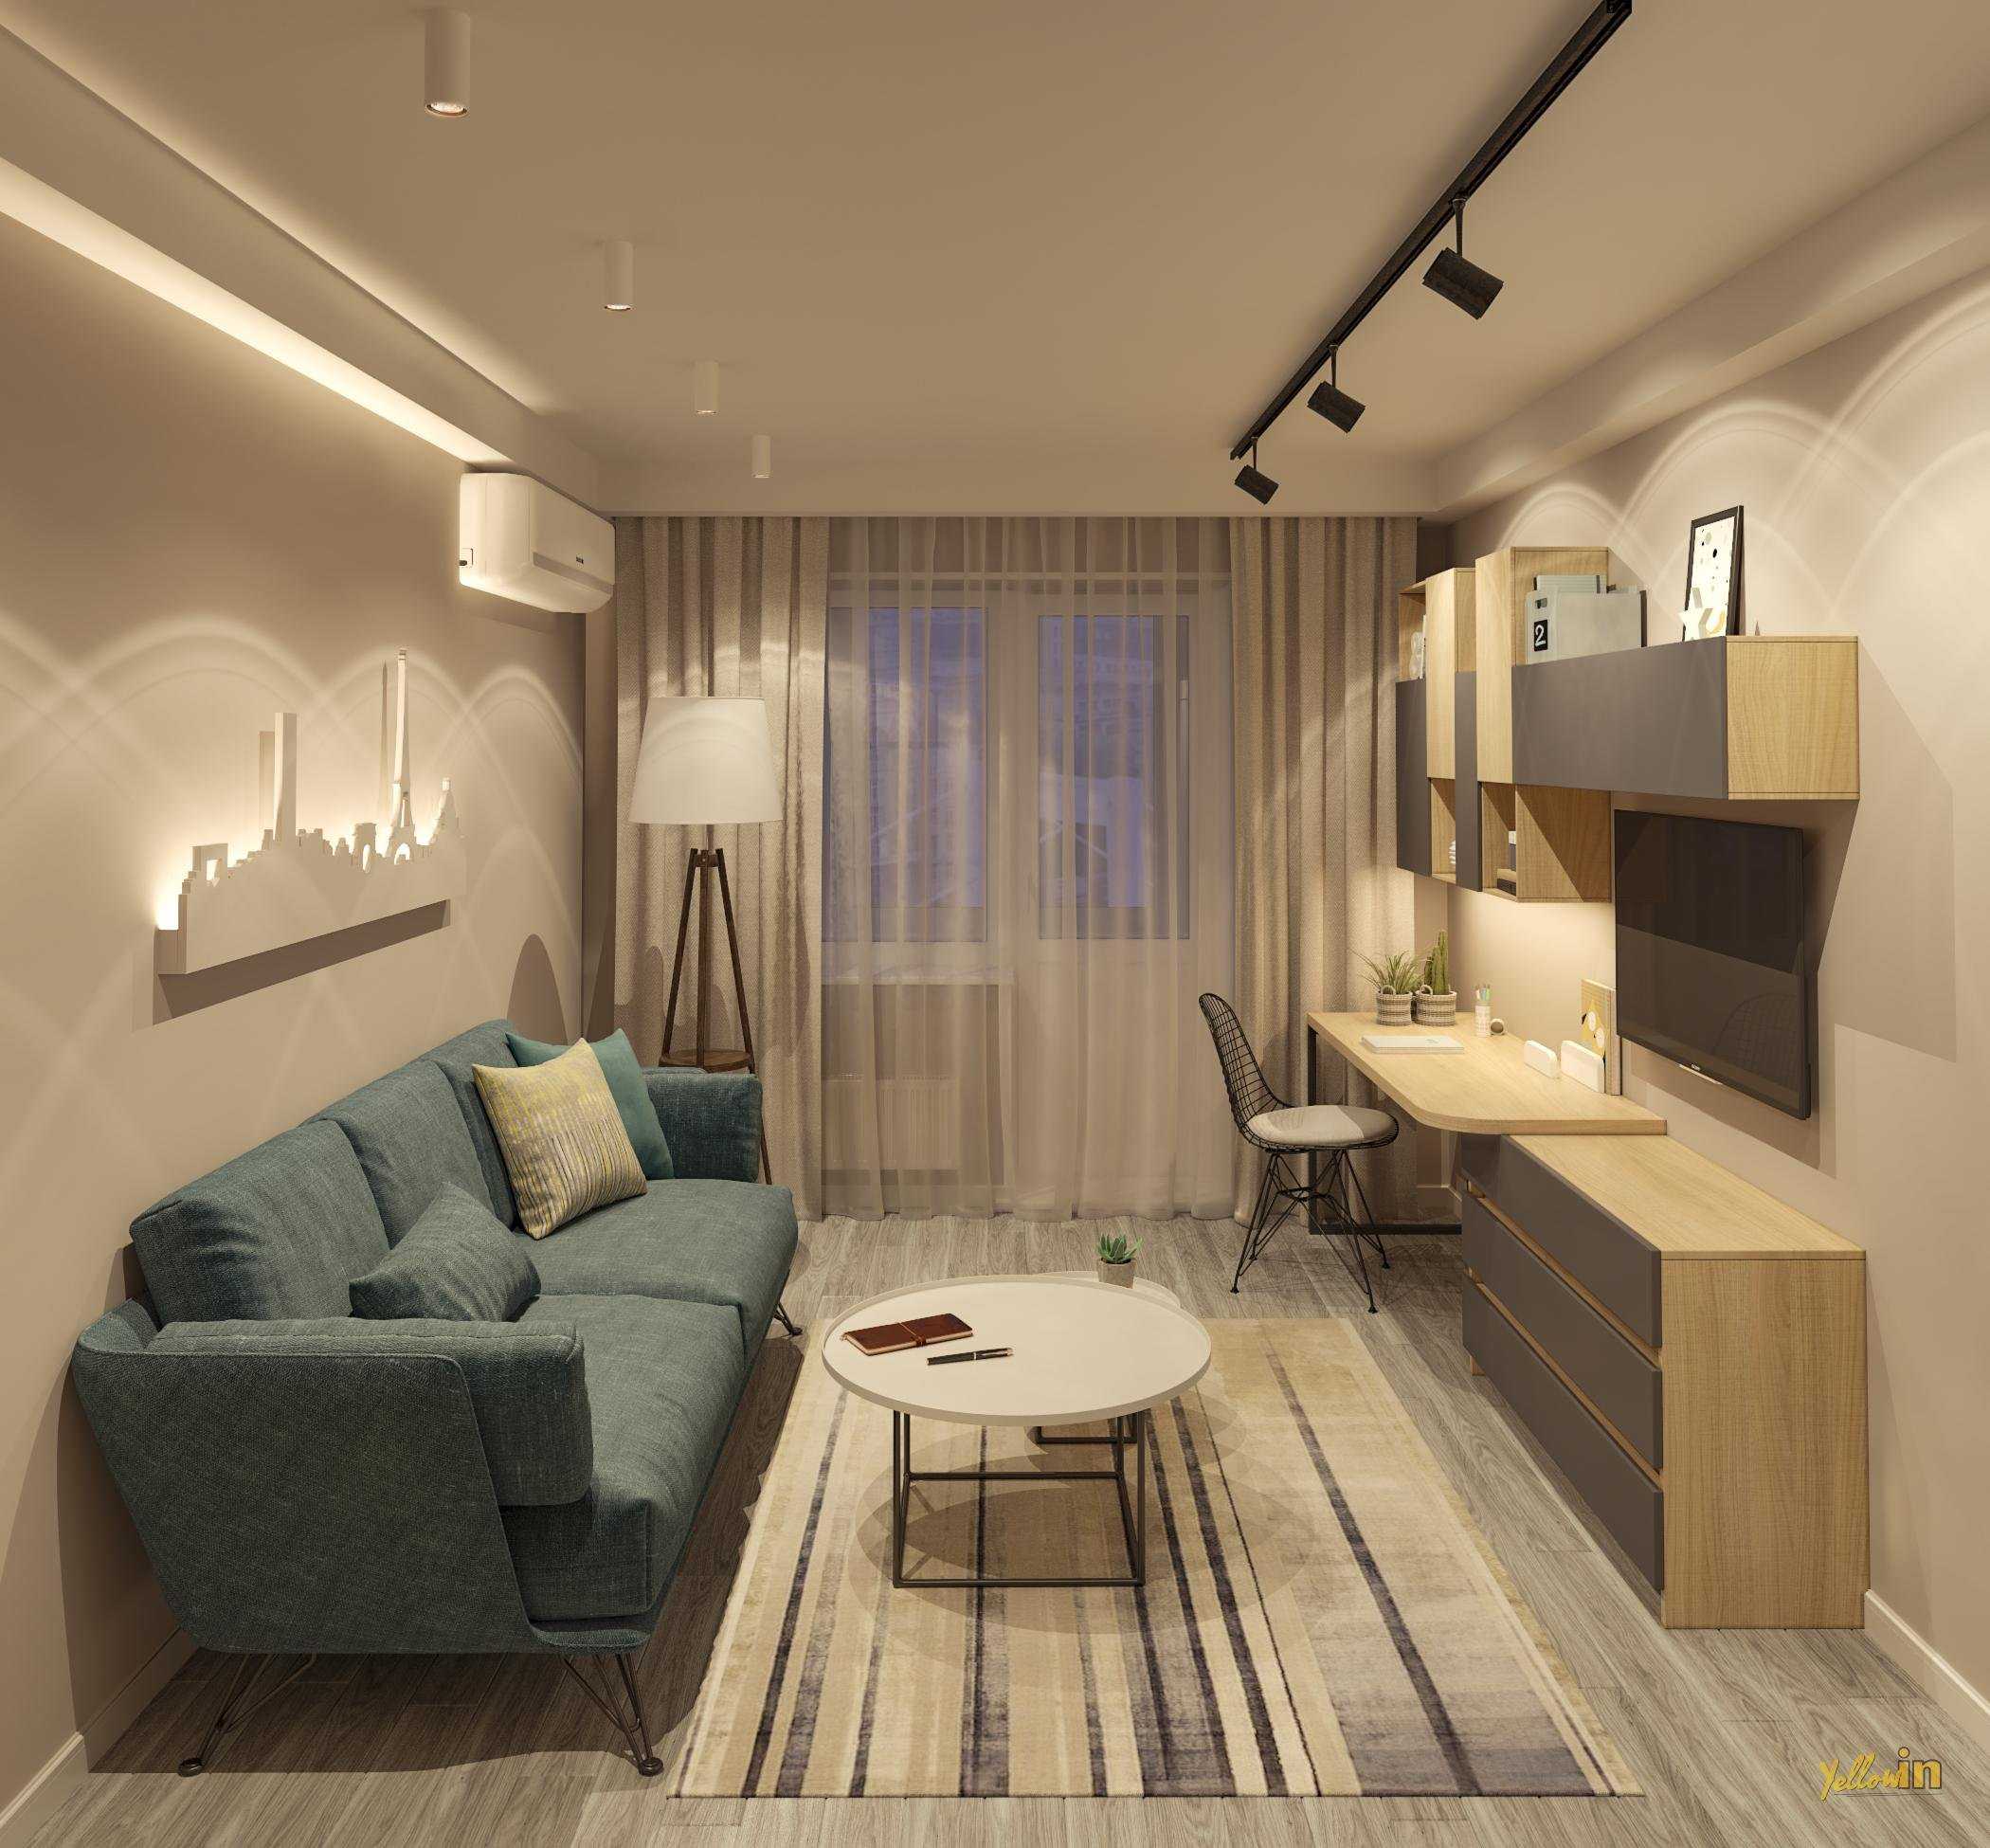 Дизайн двухкомнатной квартиры 50 кв. м (52 фото): проект интерьера маленькой 2-комнатной квартиры